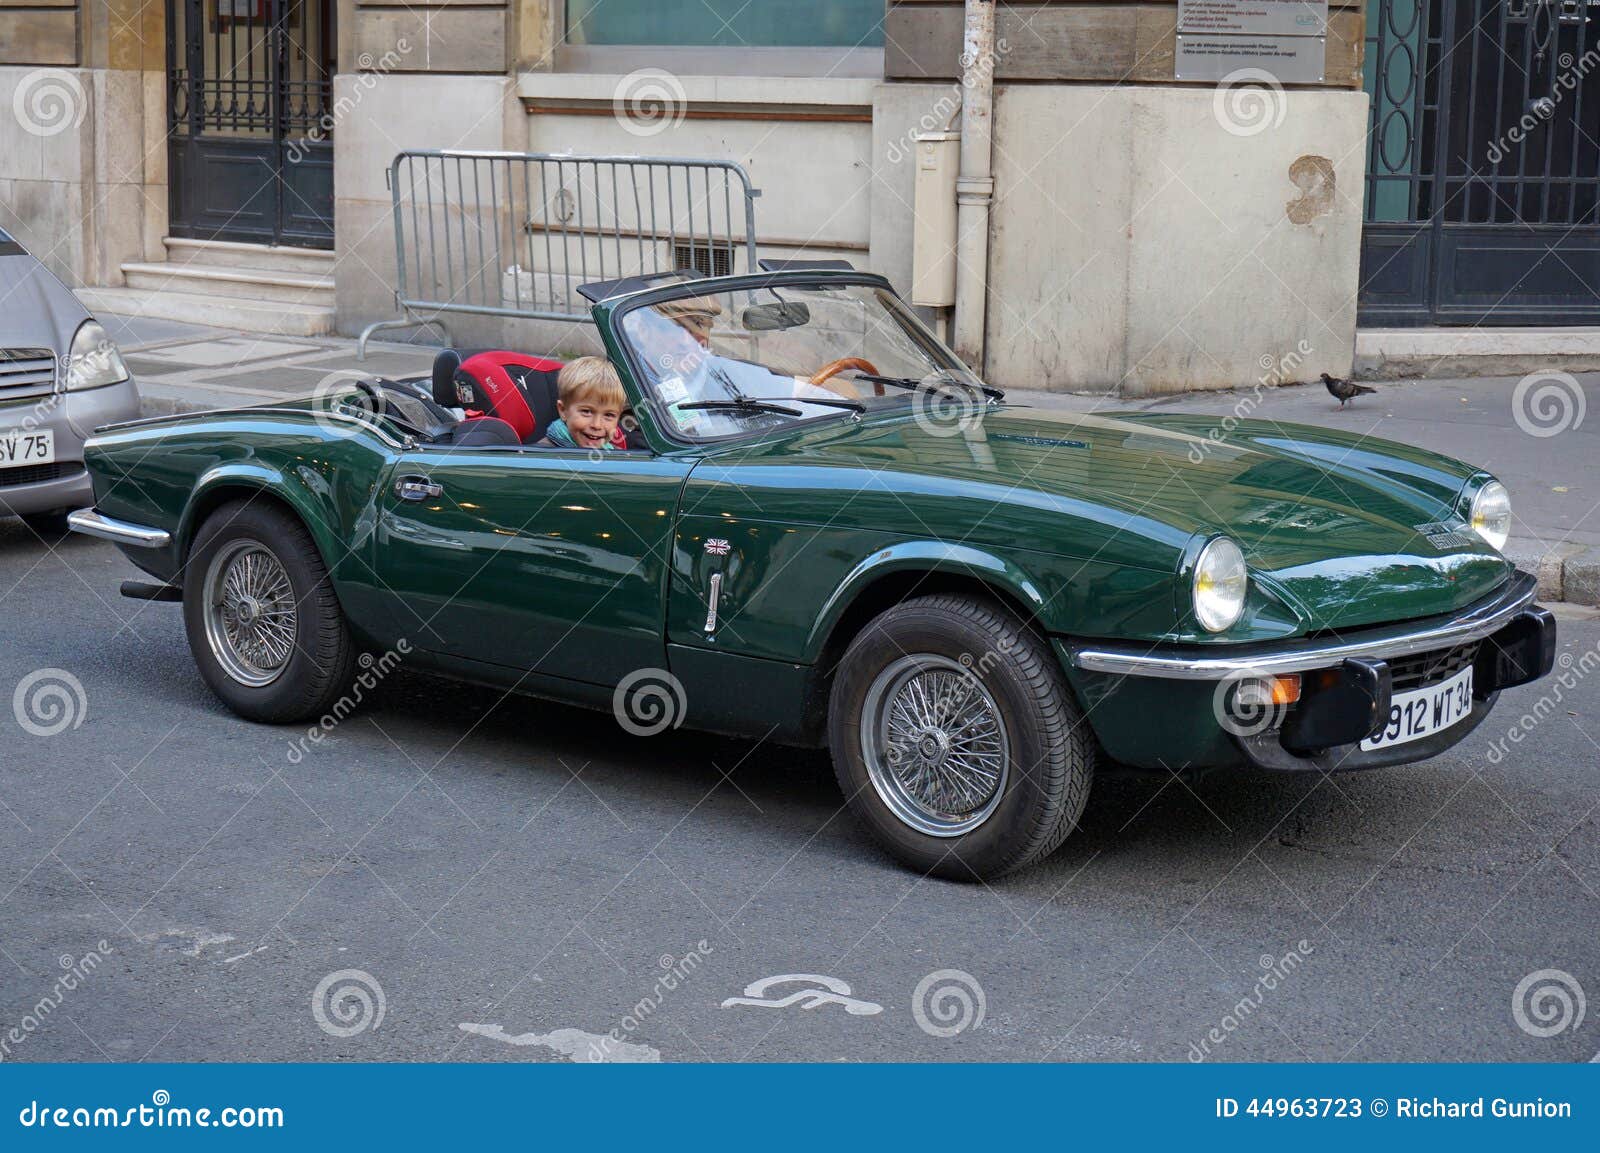 Photo of vintage british triumph sports car in paris france on 9/15/14 